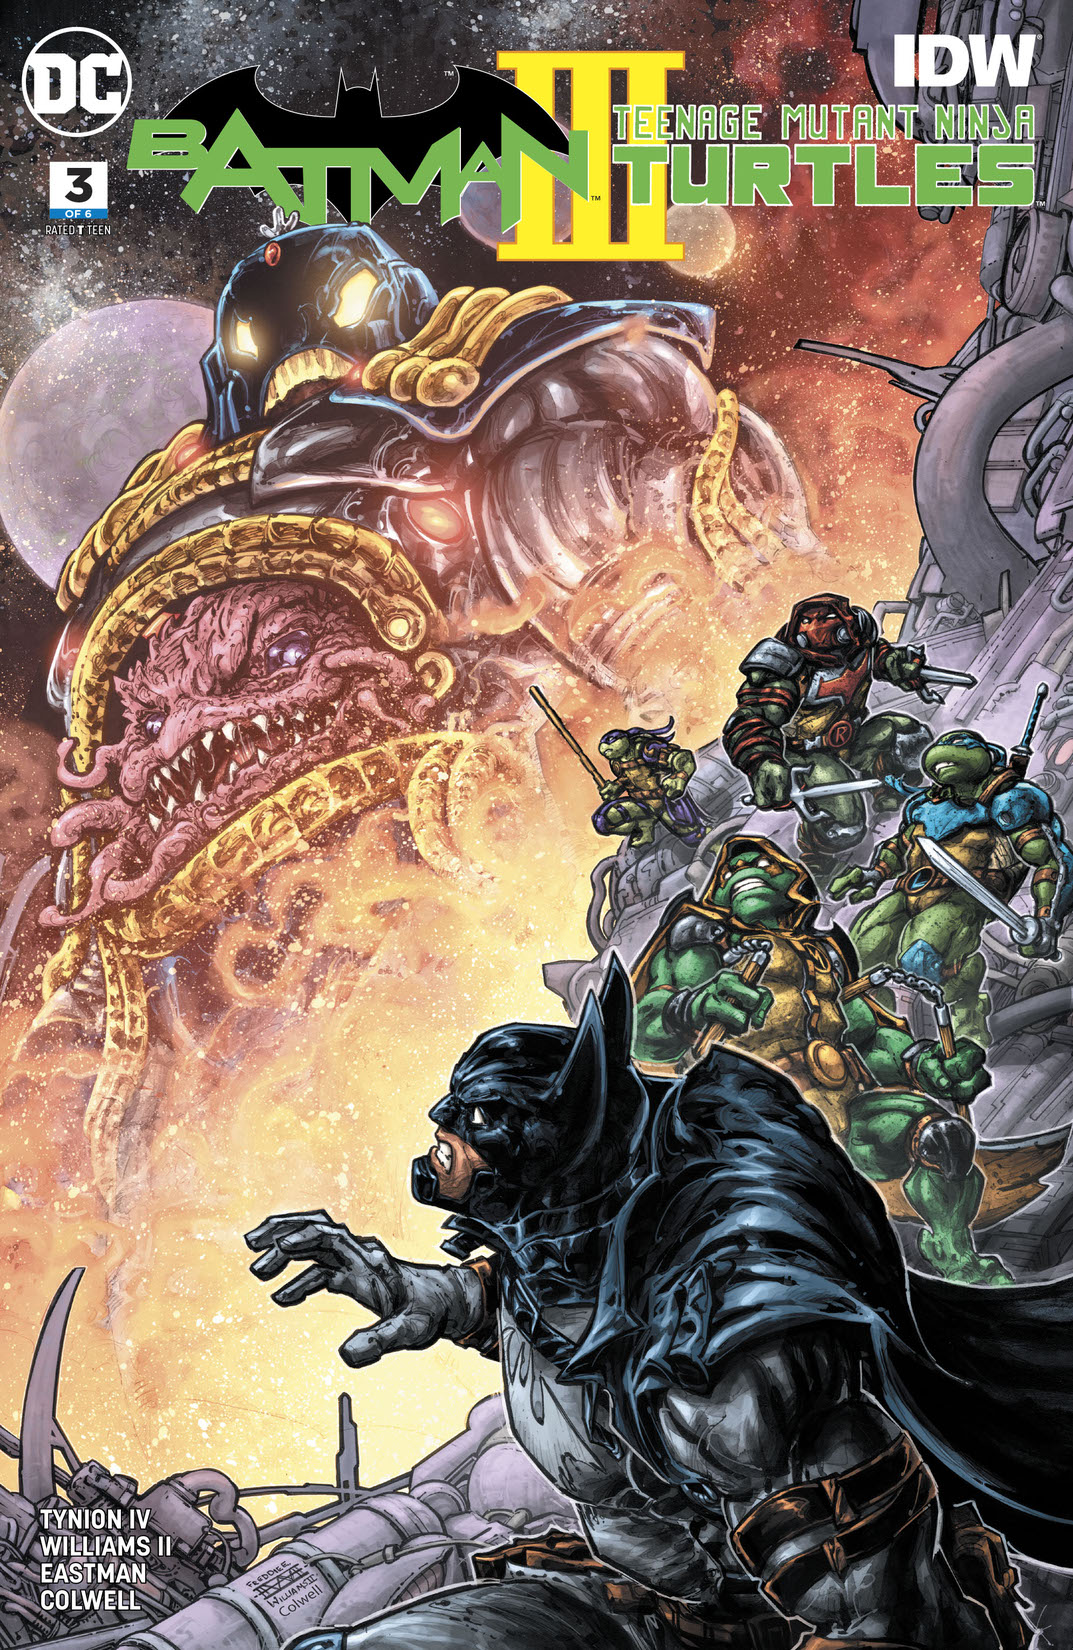 Batman/Teenage Mutant Ninja Turtles III #3 preview images